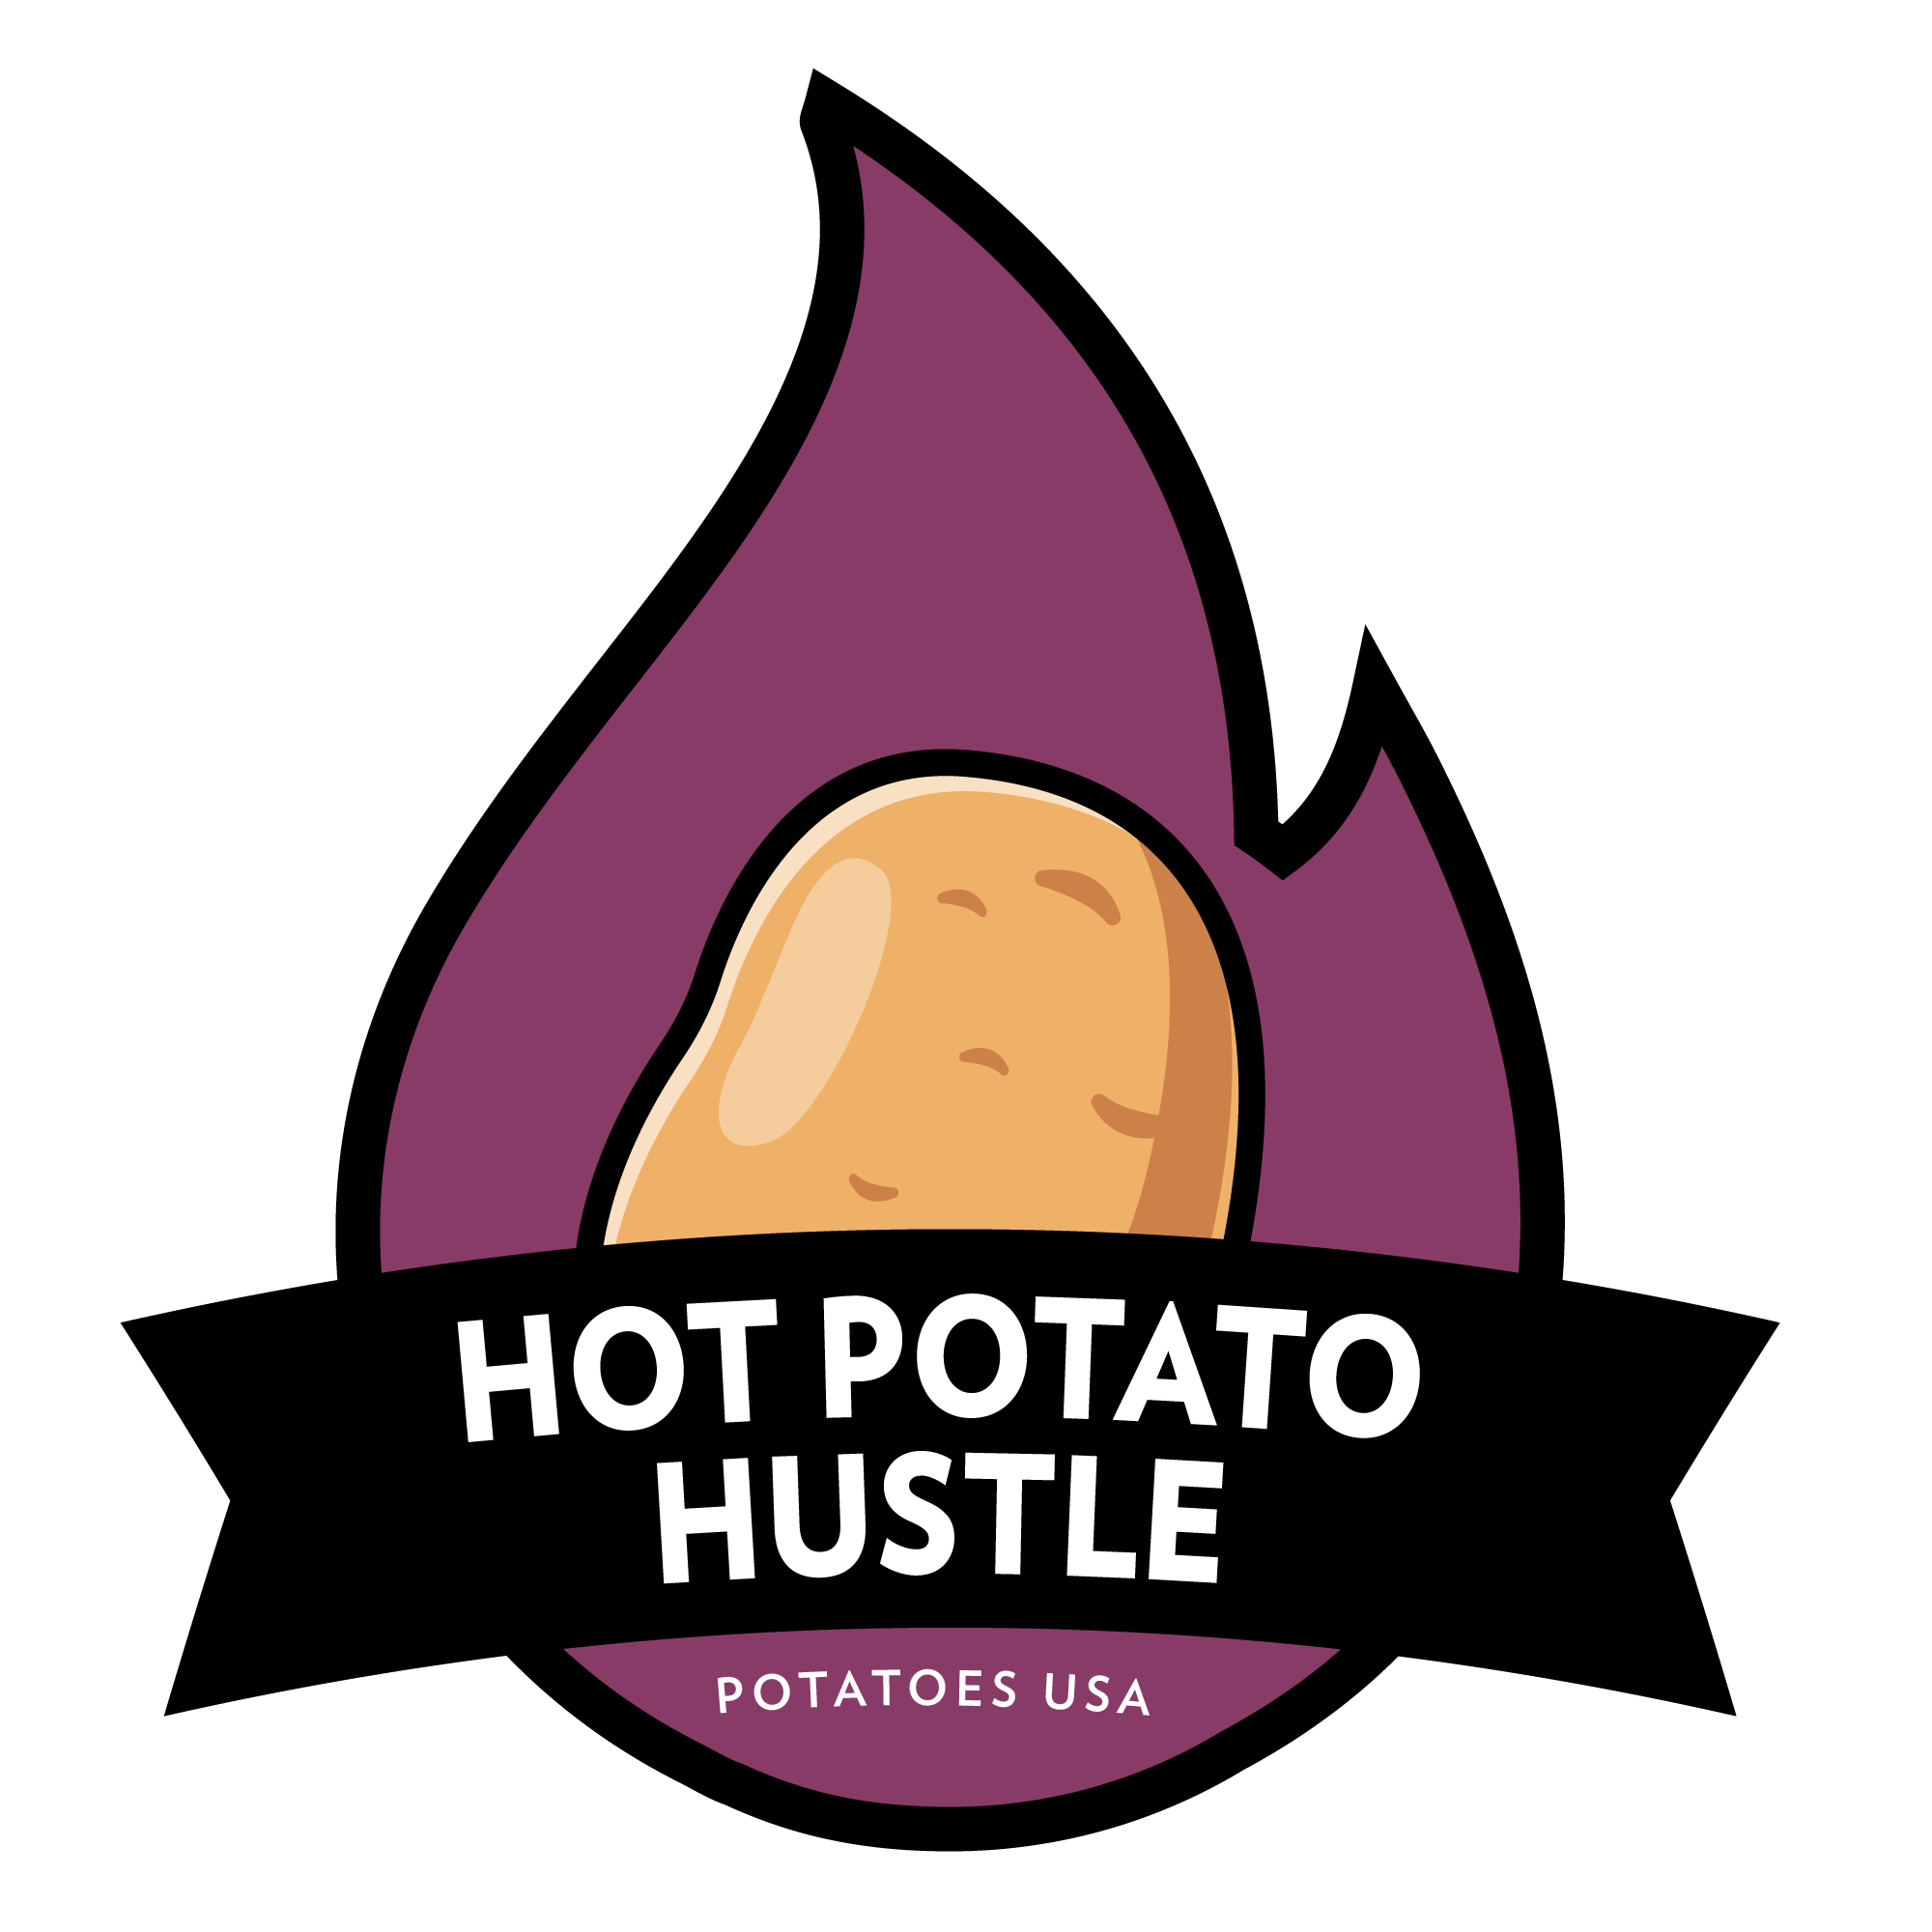 Hot Potato Hustle by Potatoes USA